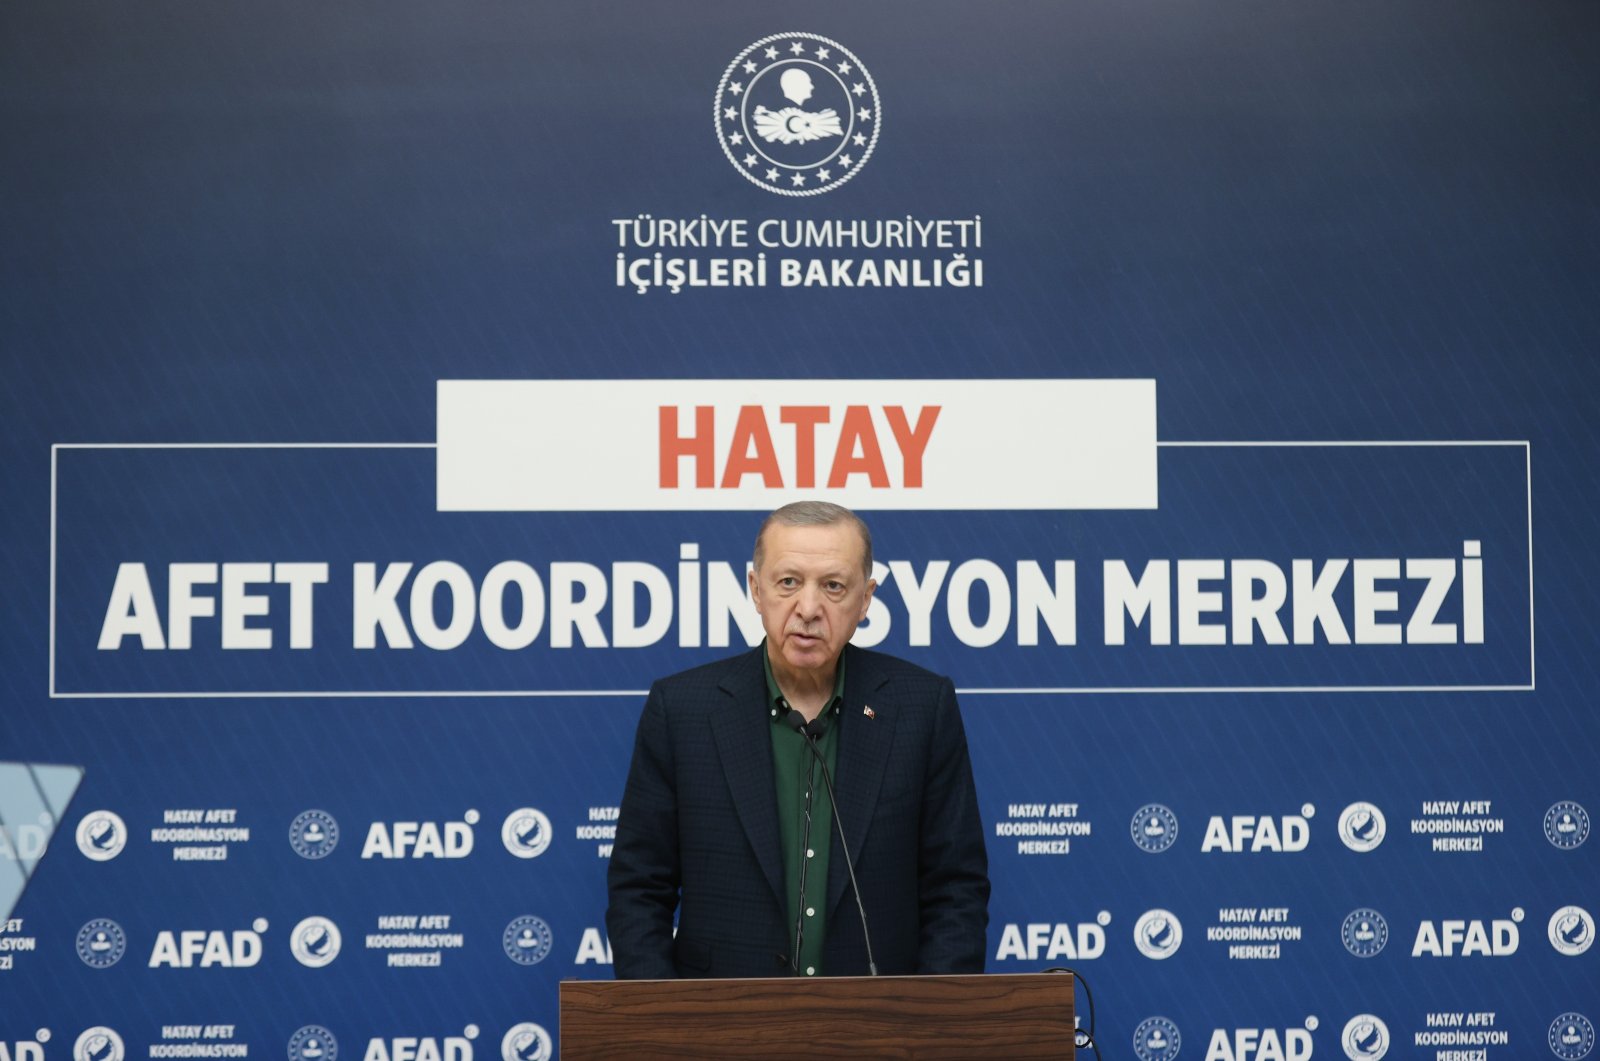 President Recep Tayyip Erdoğan speaks at the AFAD Coordination Center in Hatay, Feb. 20, 2023. (AA Photo)